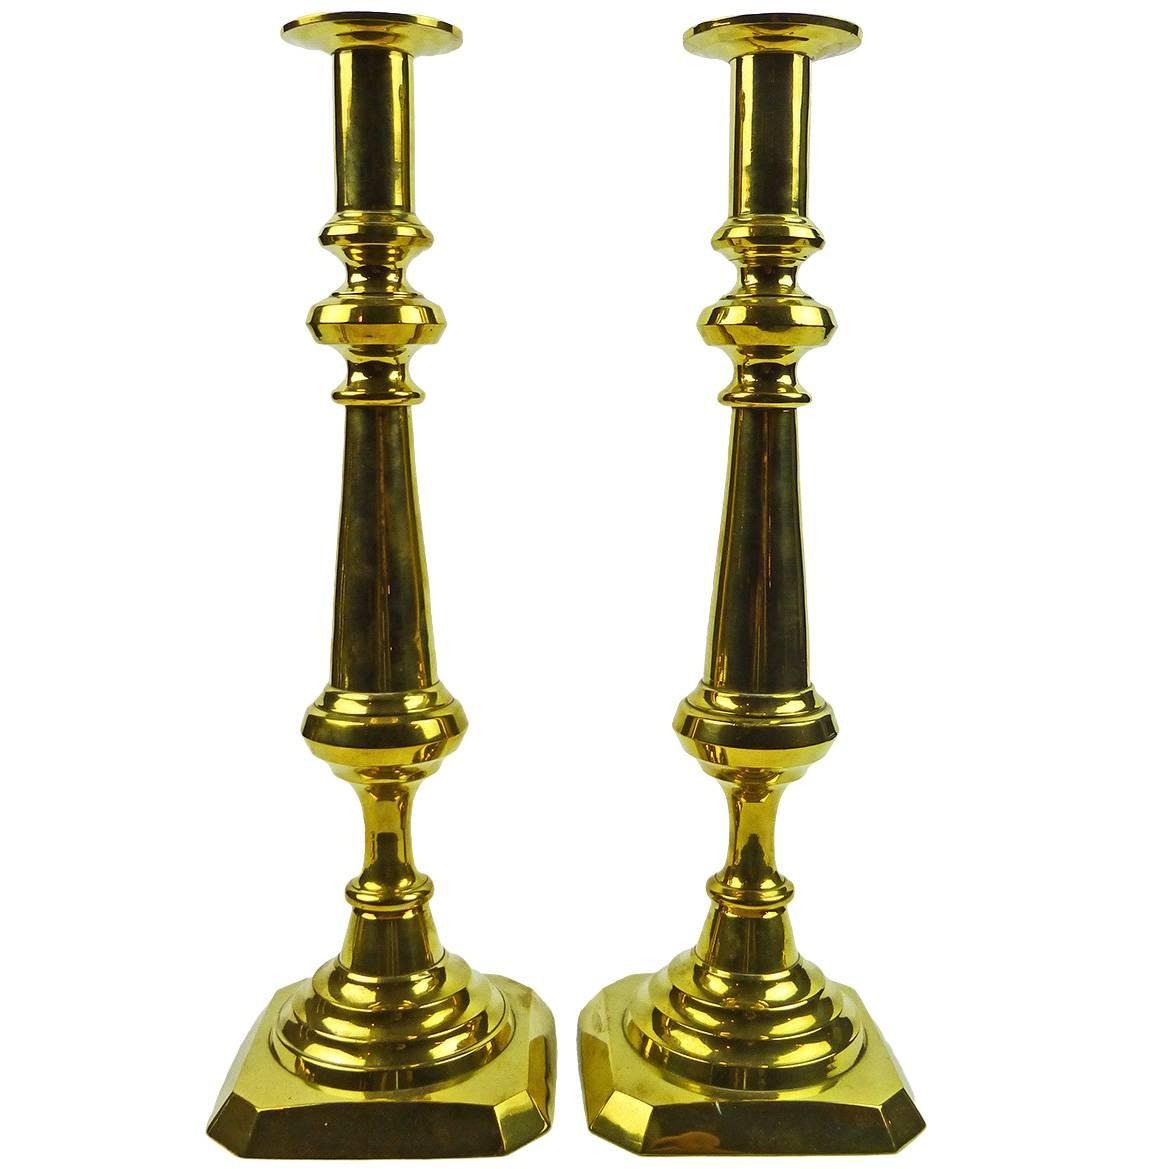 Pair of Tall English Brass “Push Up” Candlesticks, circa 1875